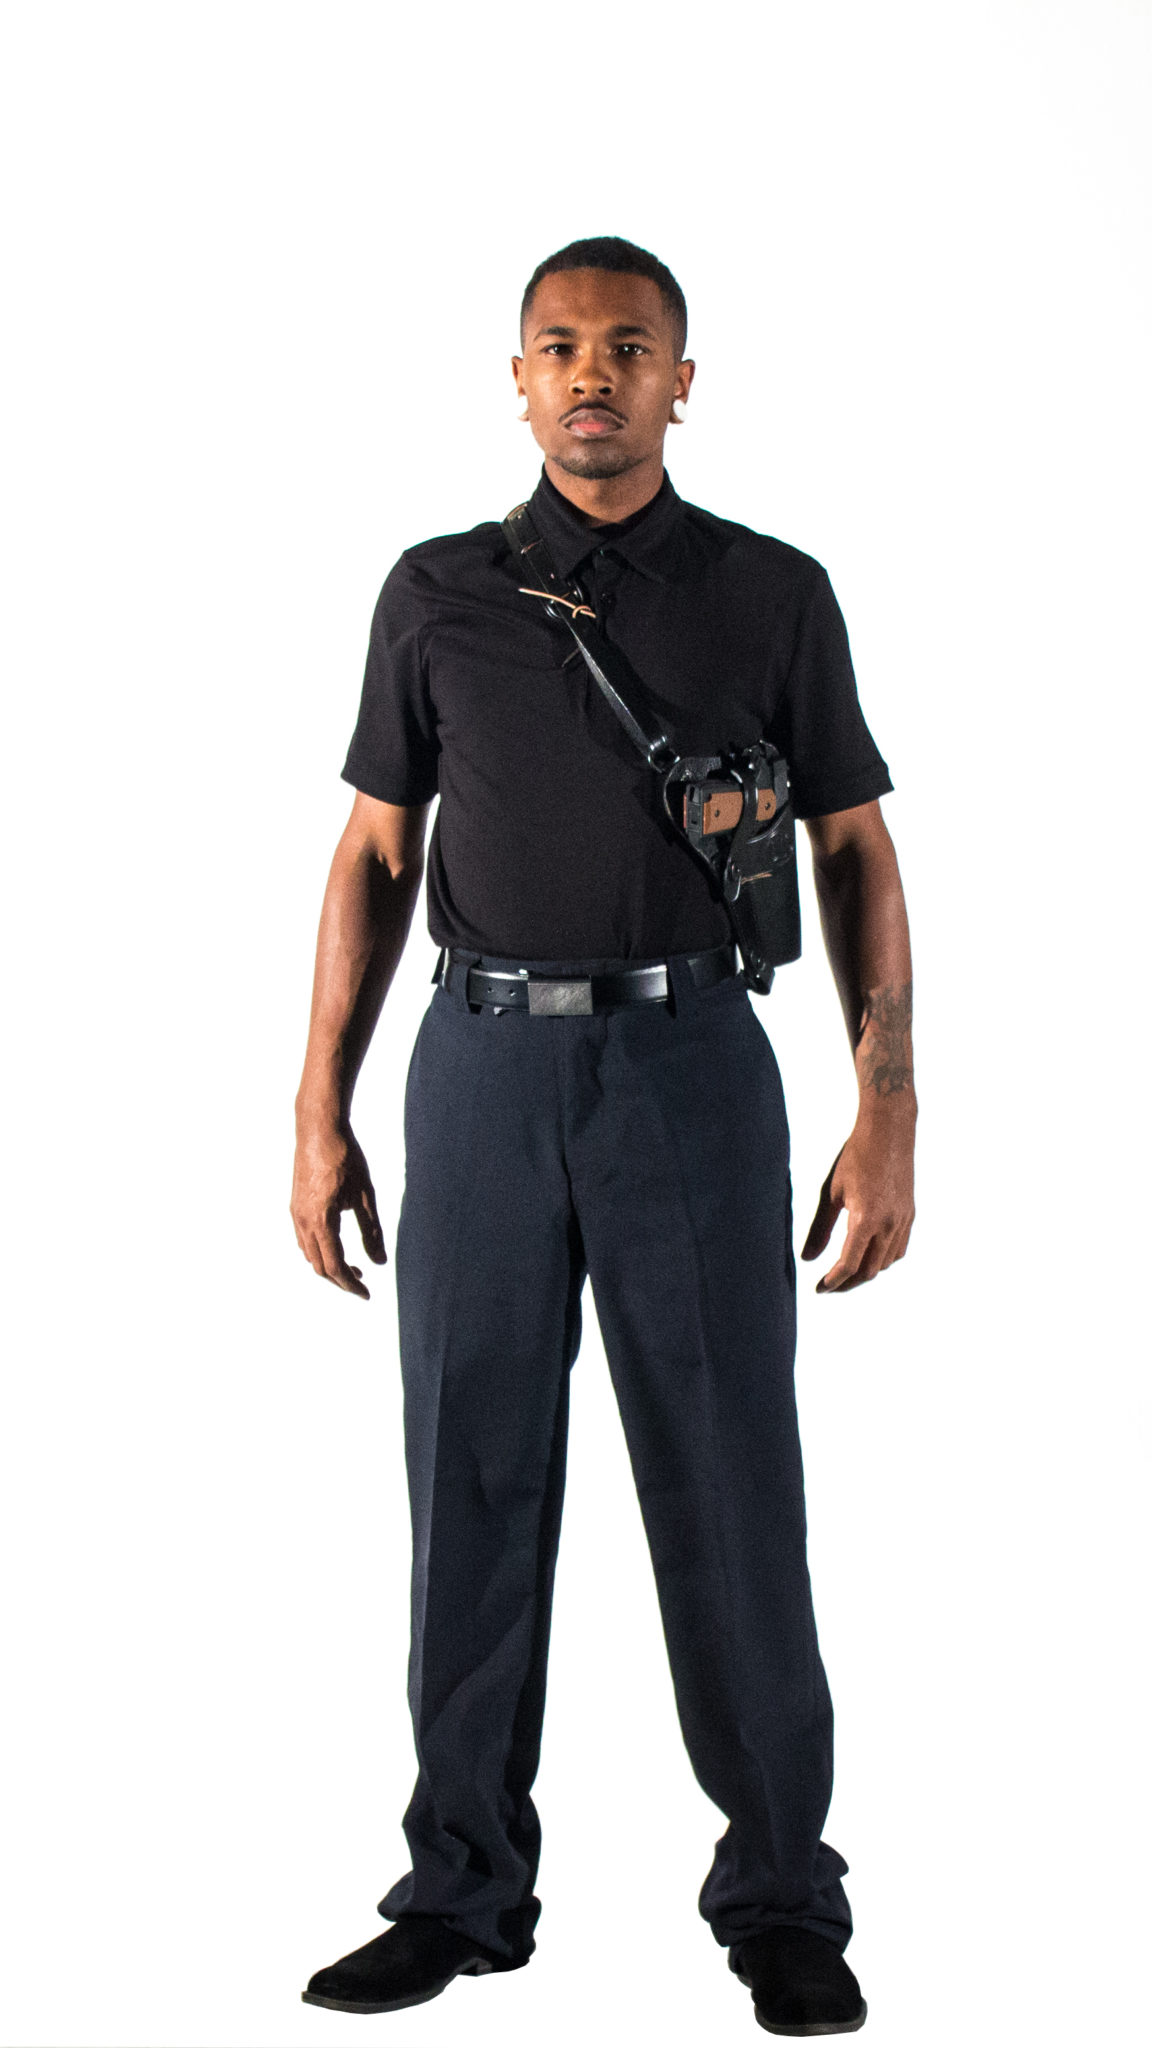 Police Detective Costume Rentals In Los Angeles